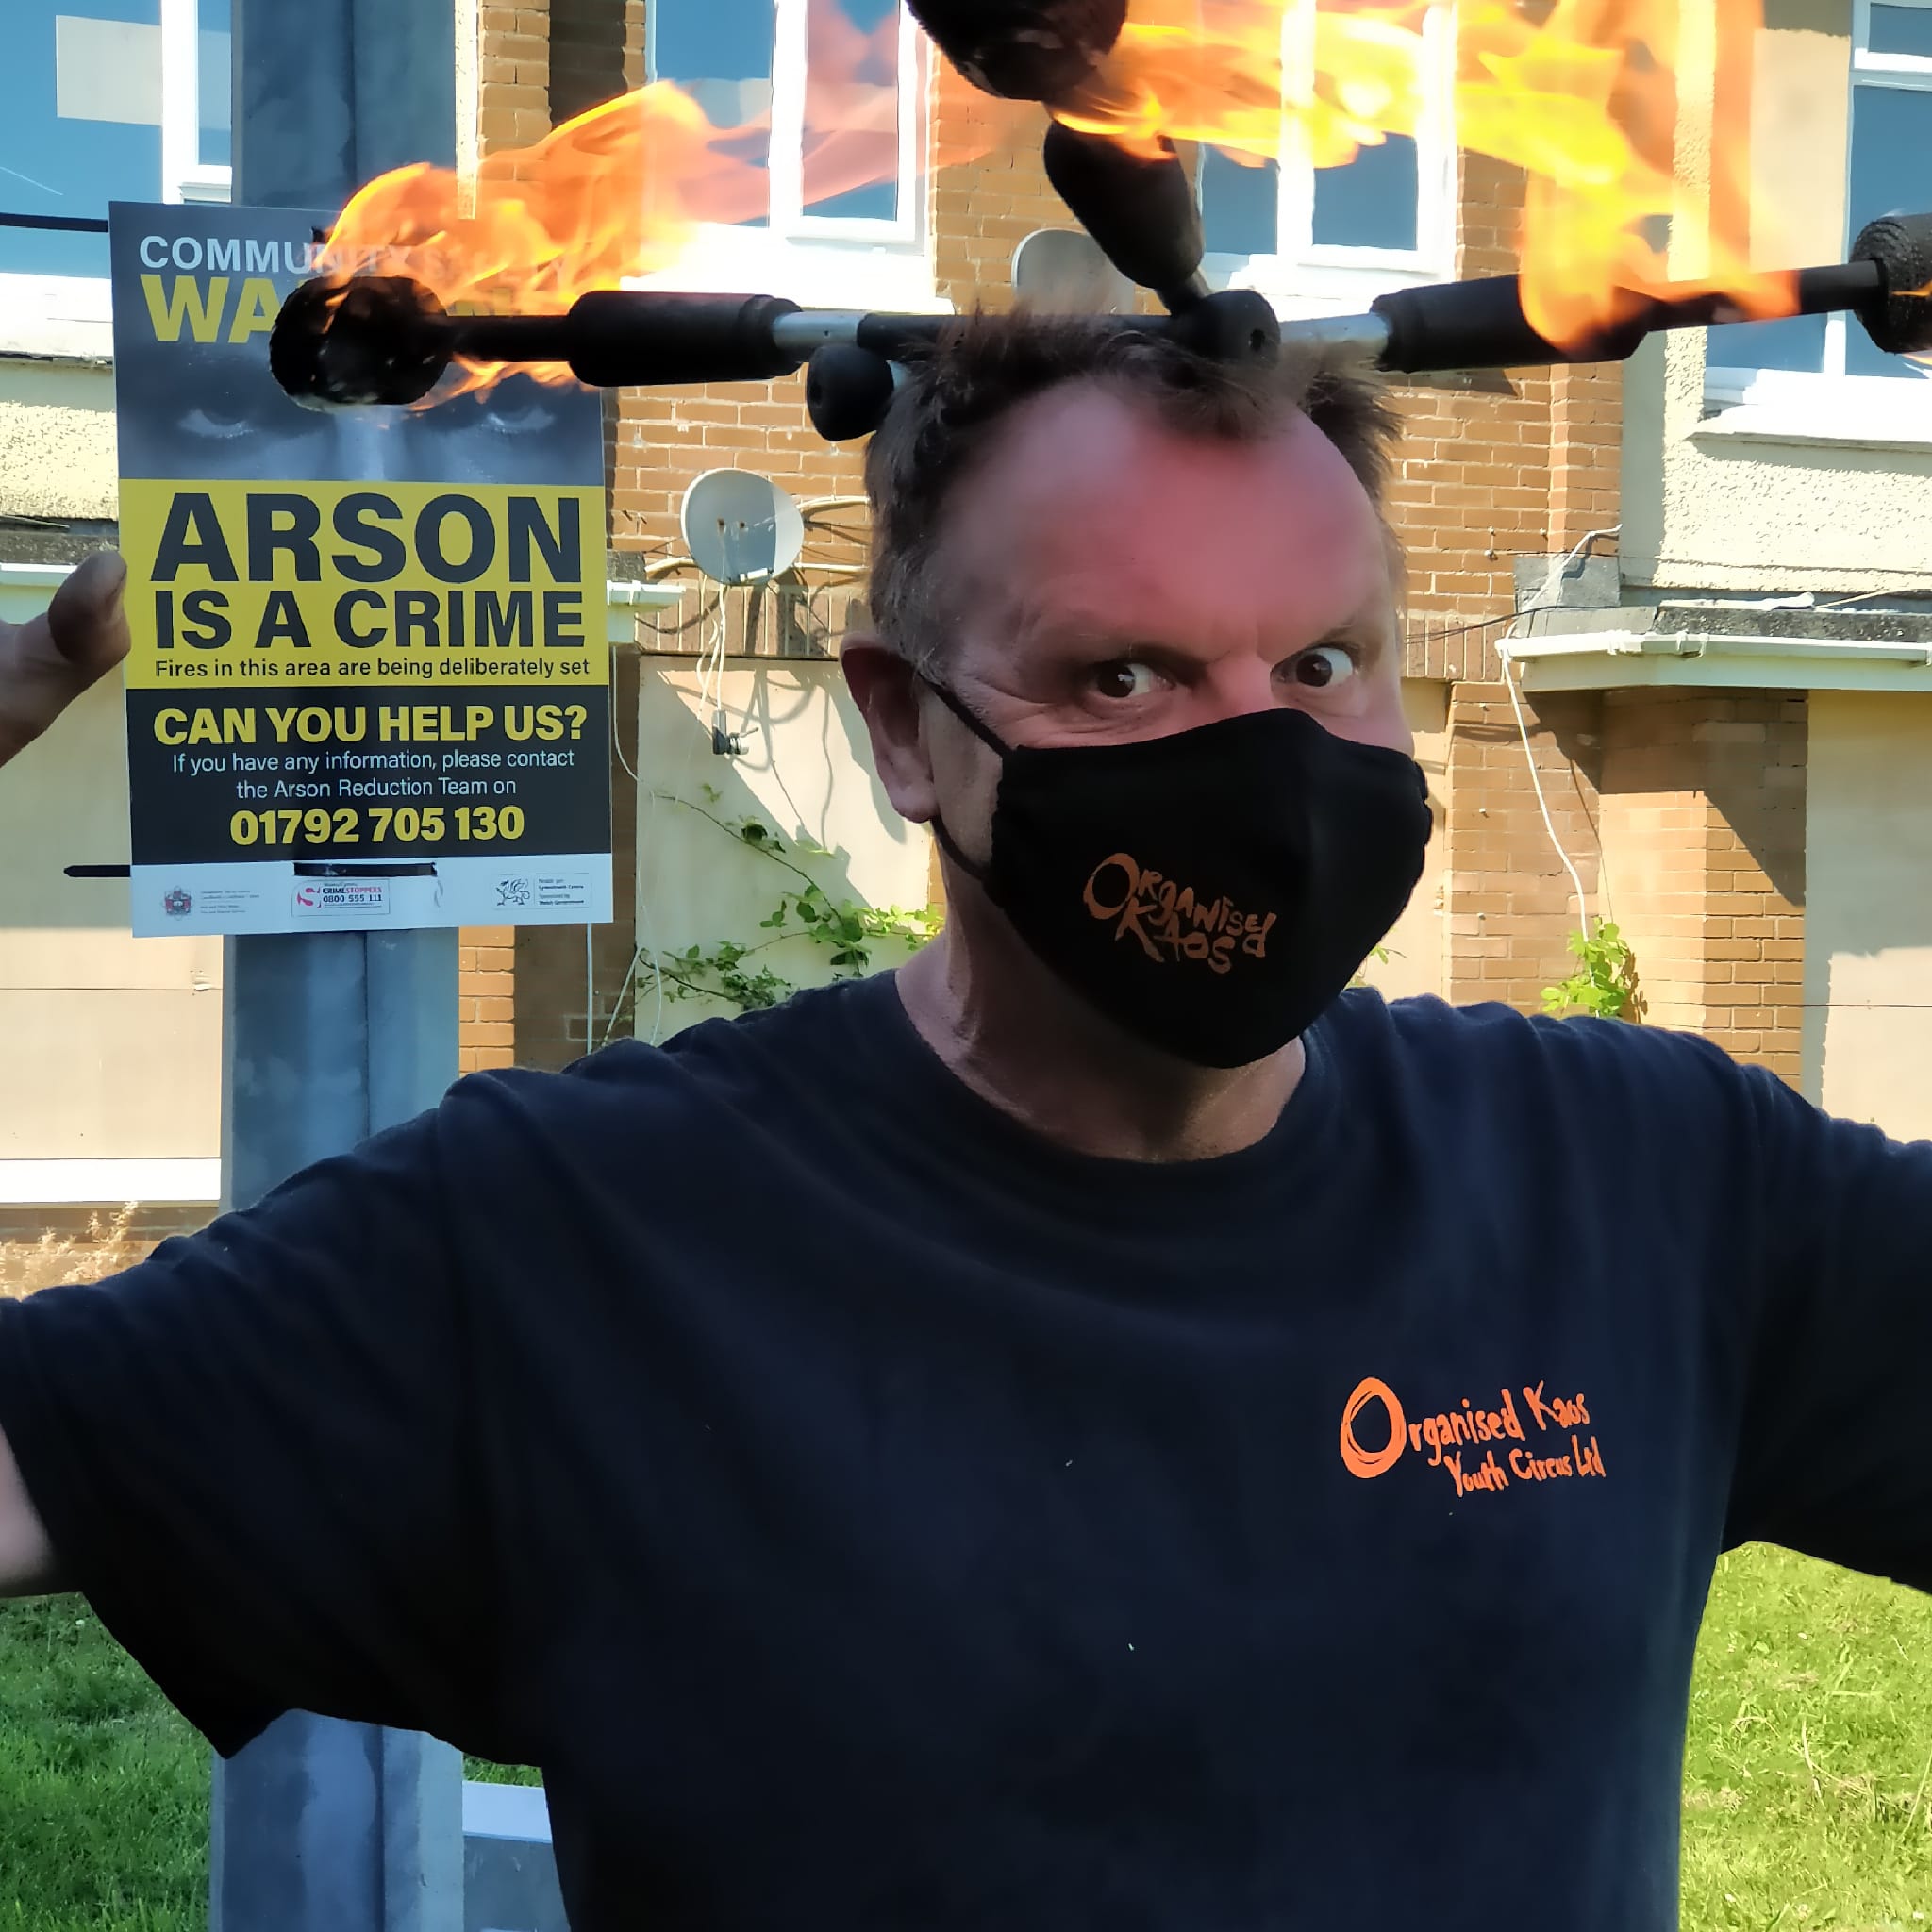 Mr Jules - say no to arson - Organised Kaos